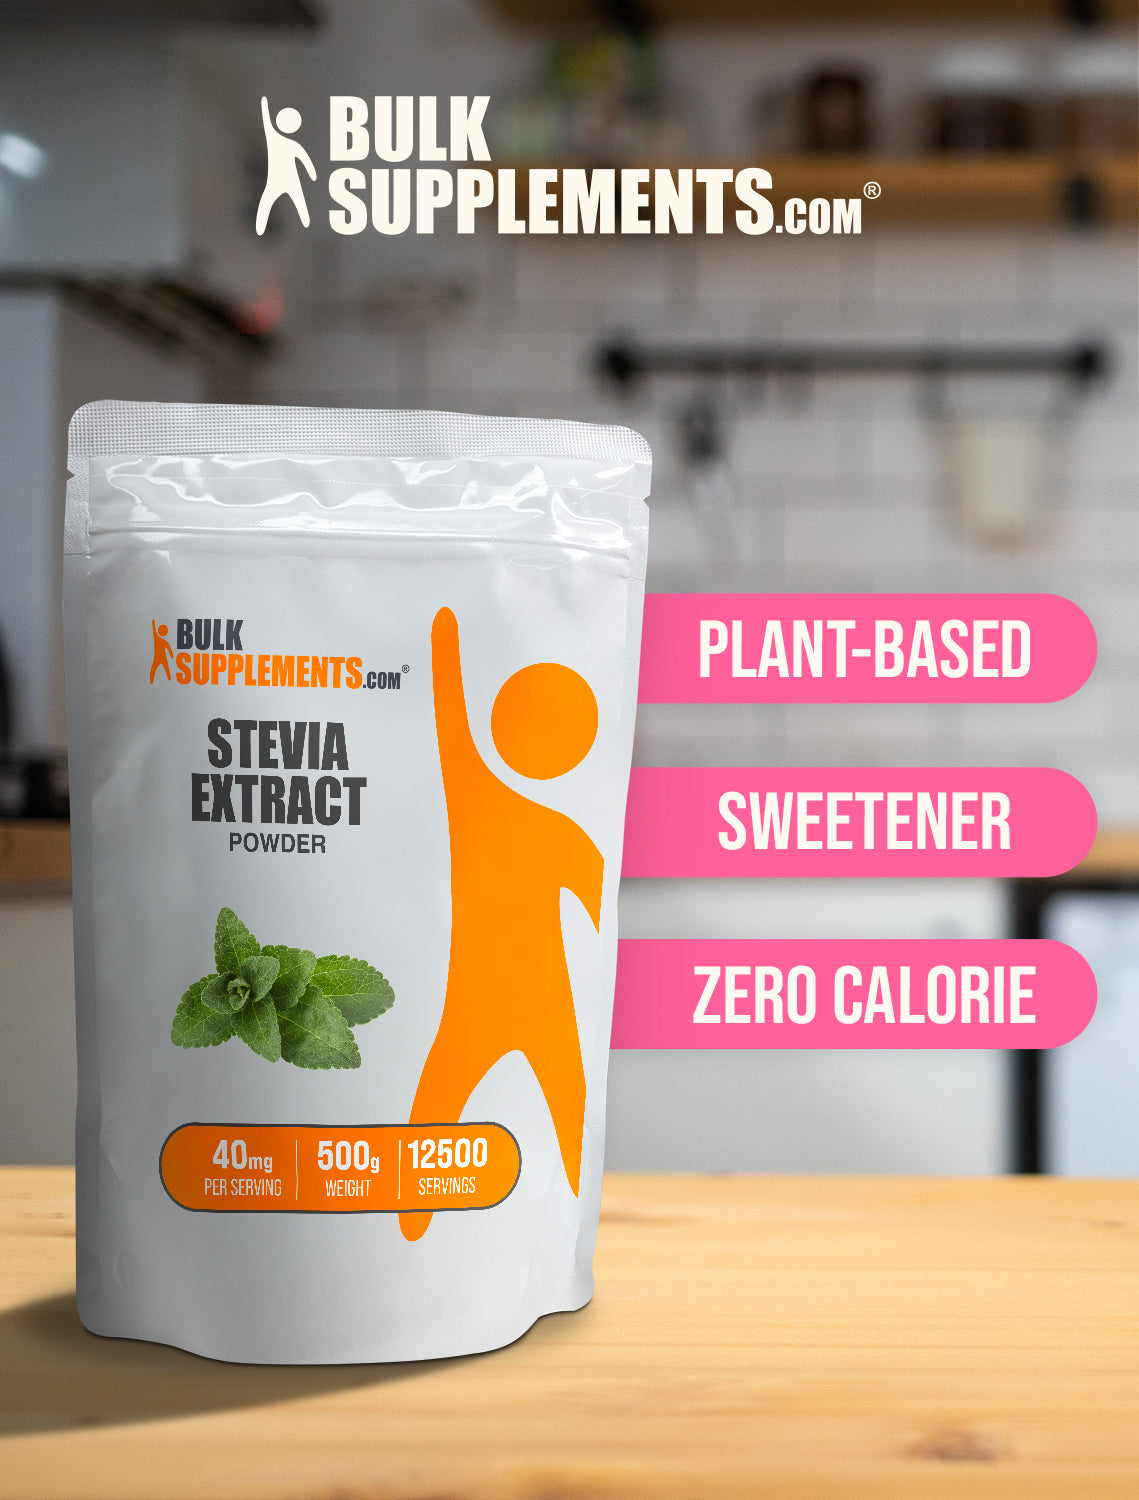 Stevia extract powder keyword image 500g